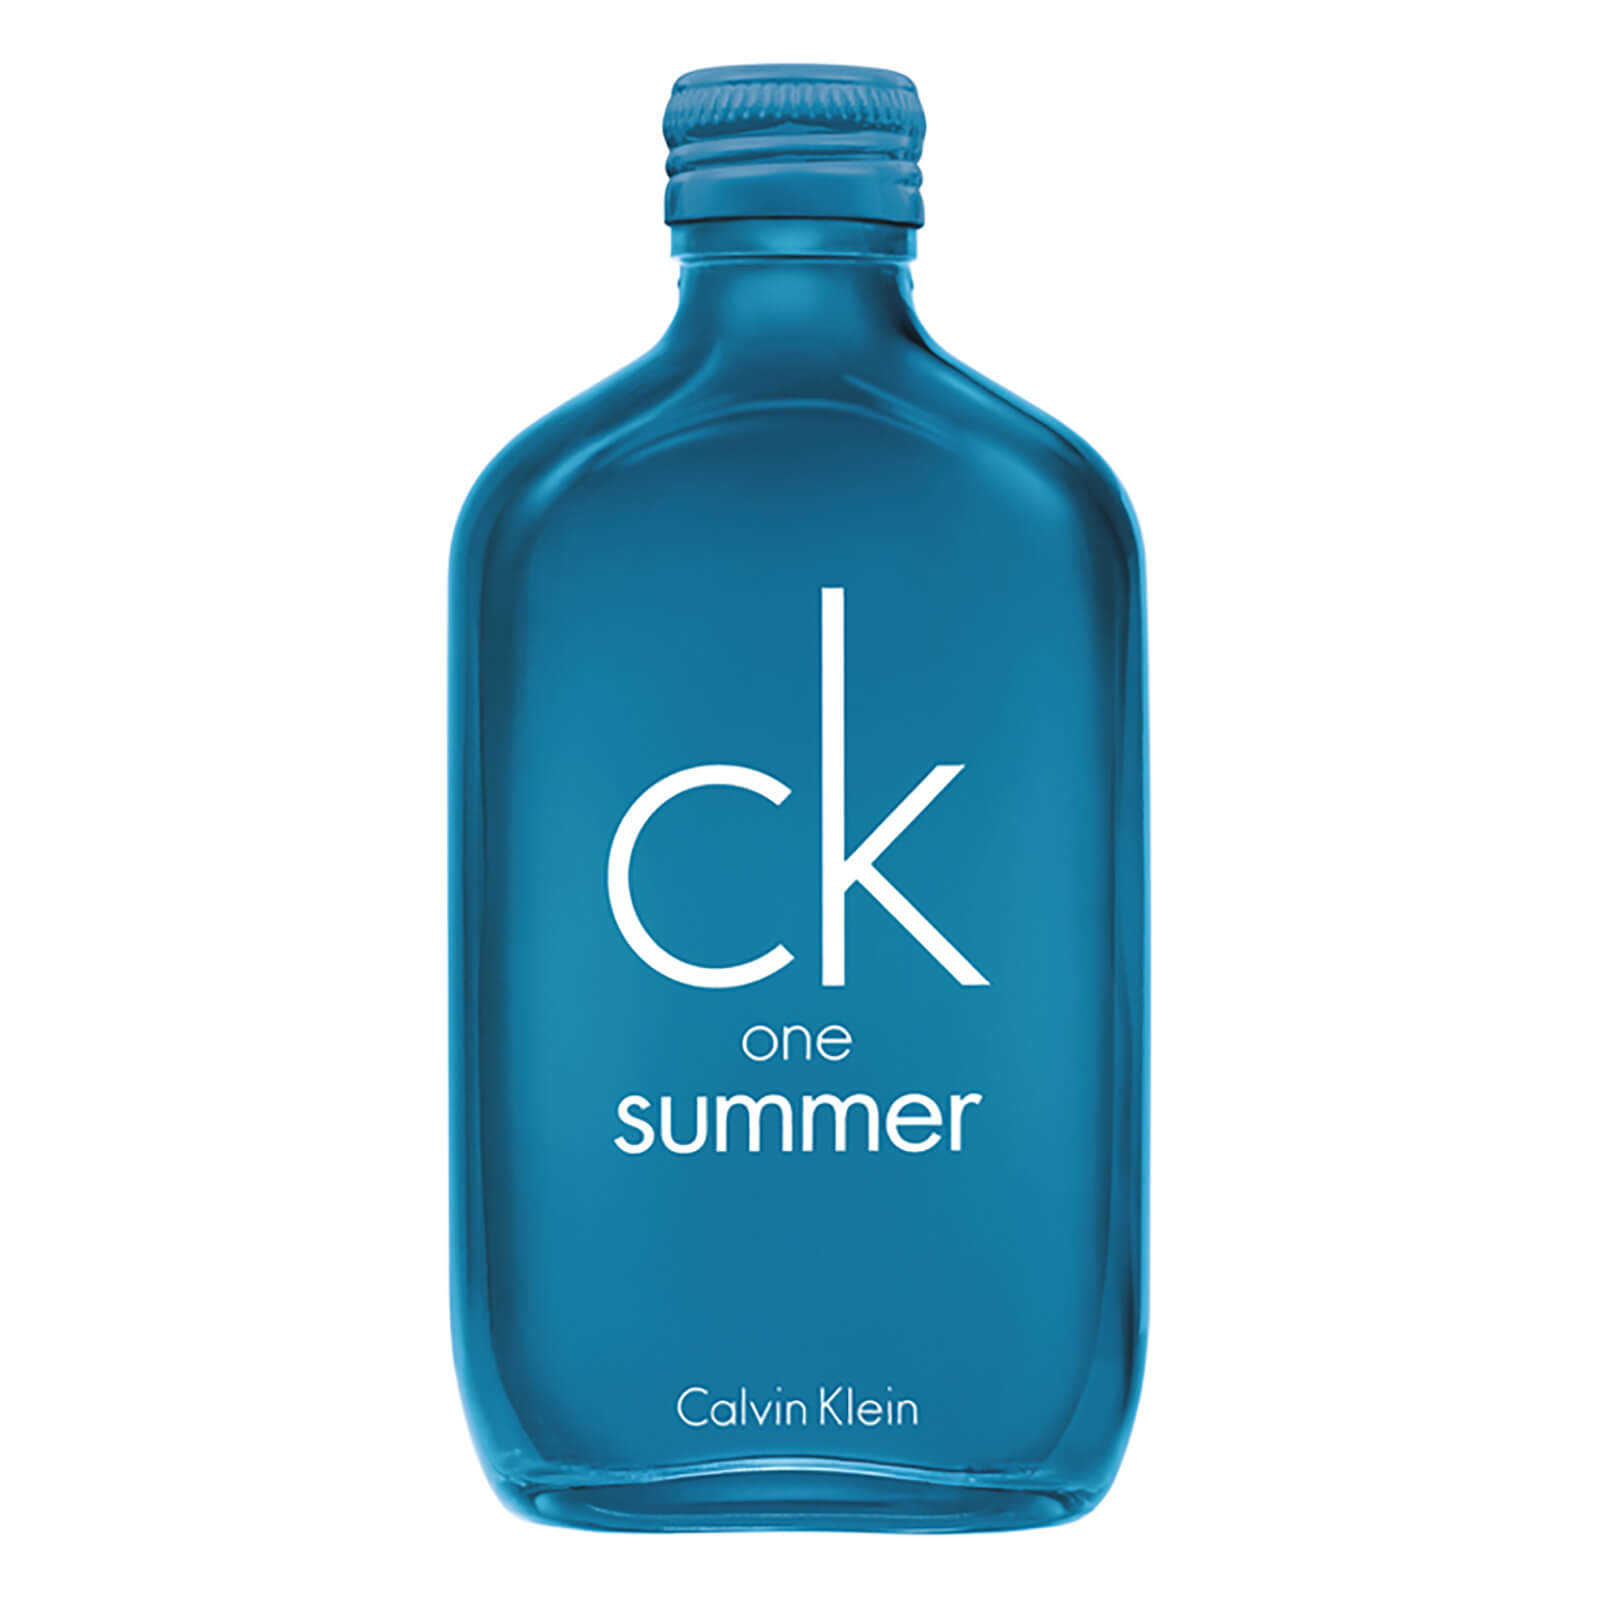 Eau de Toilette CK One Summer de Calvin Klein 100 ml